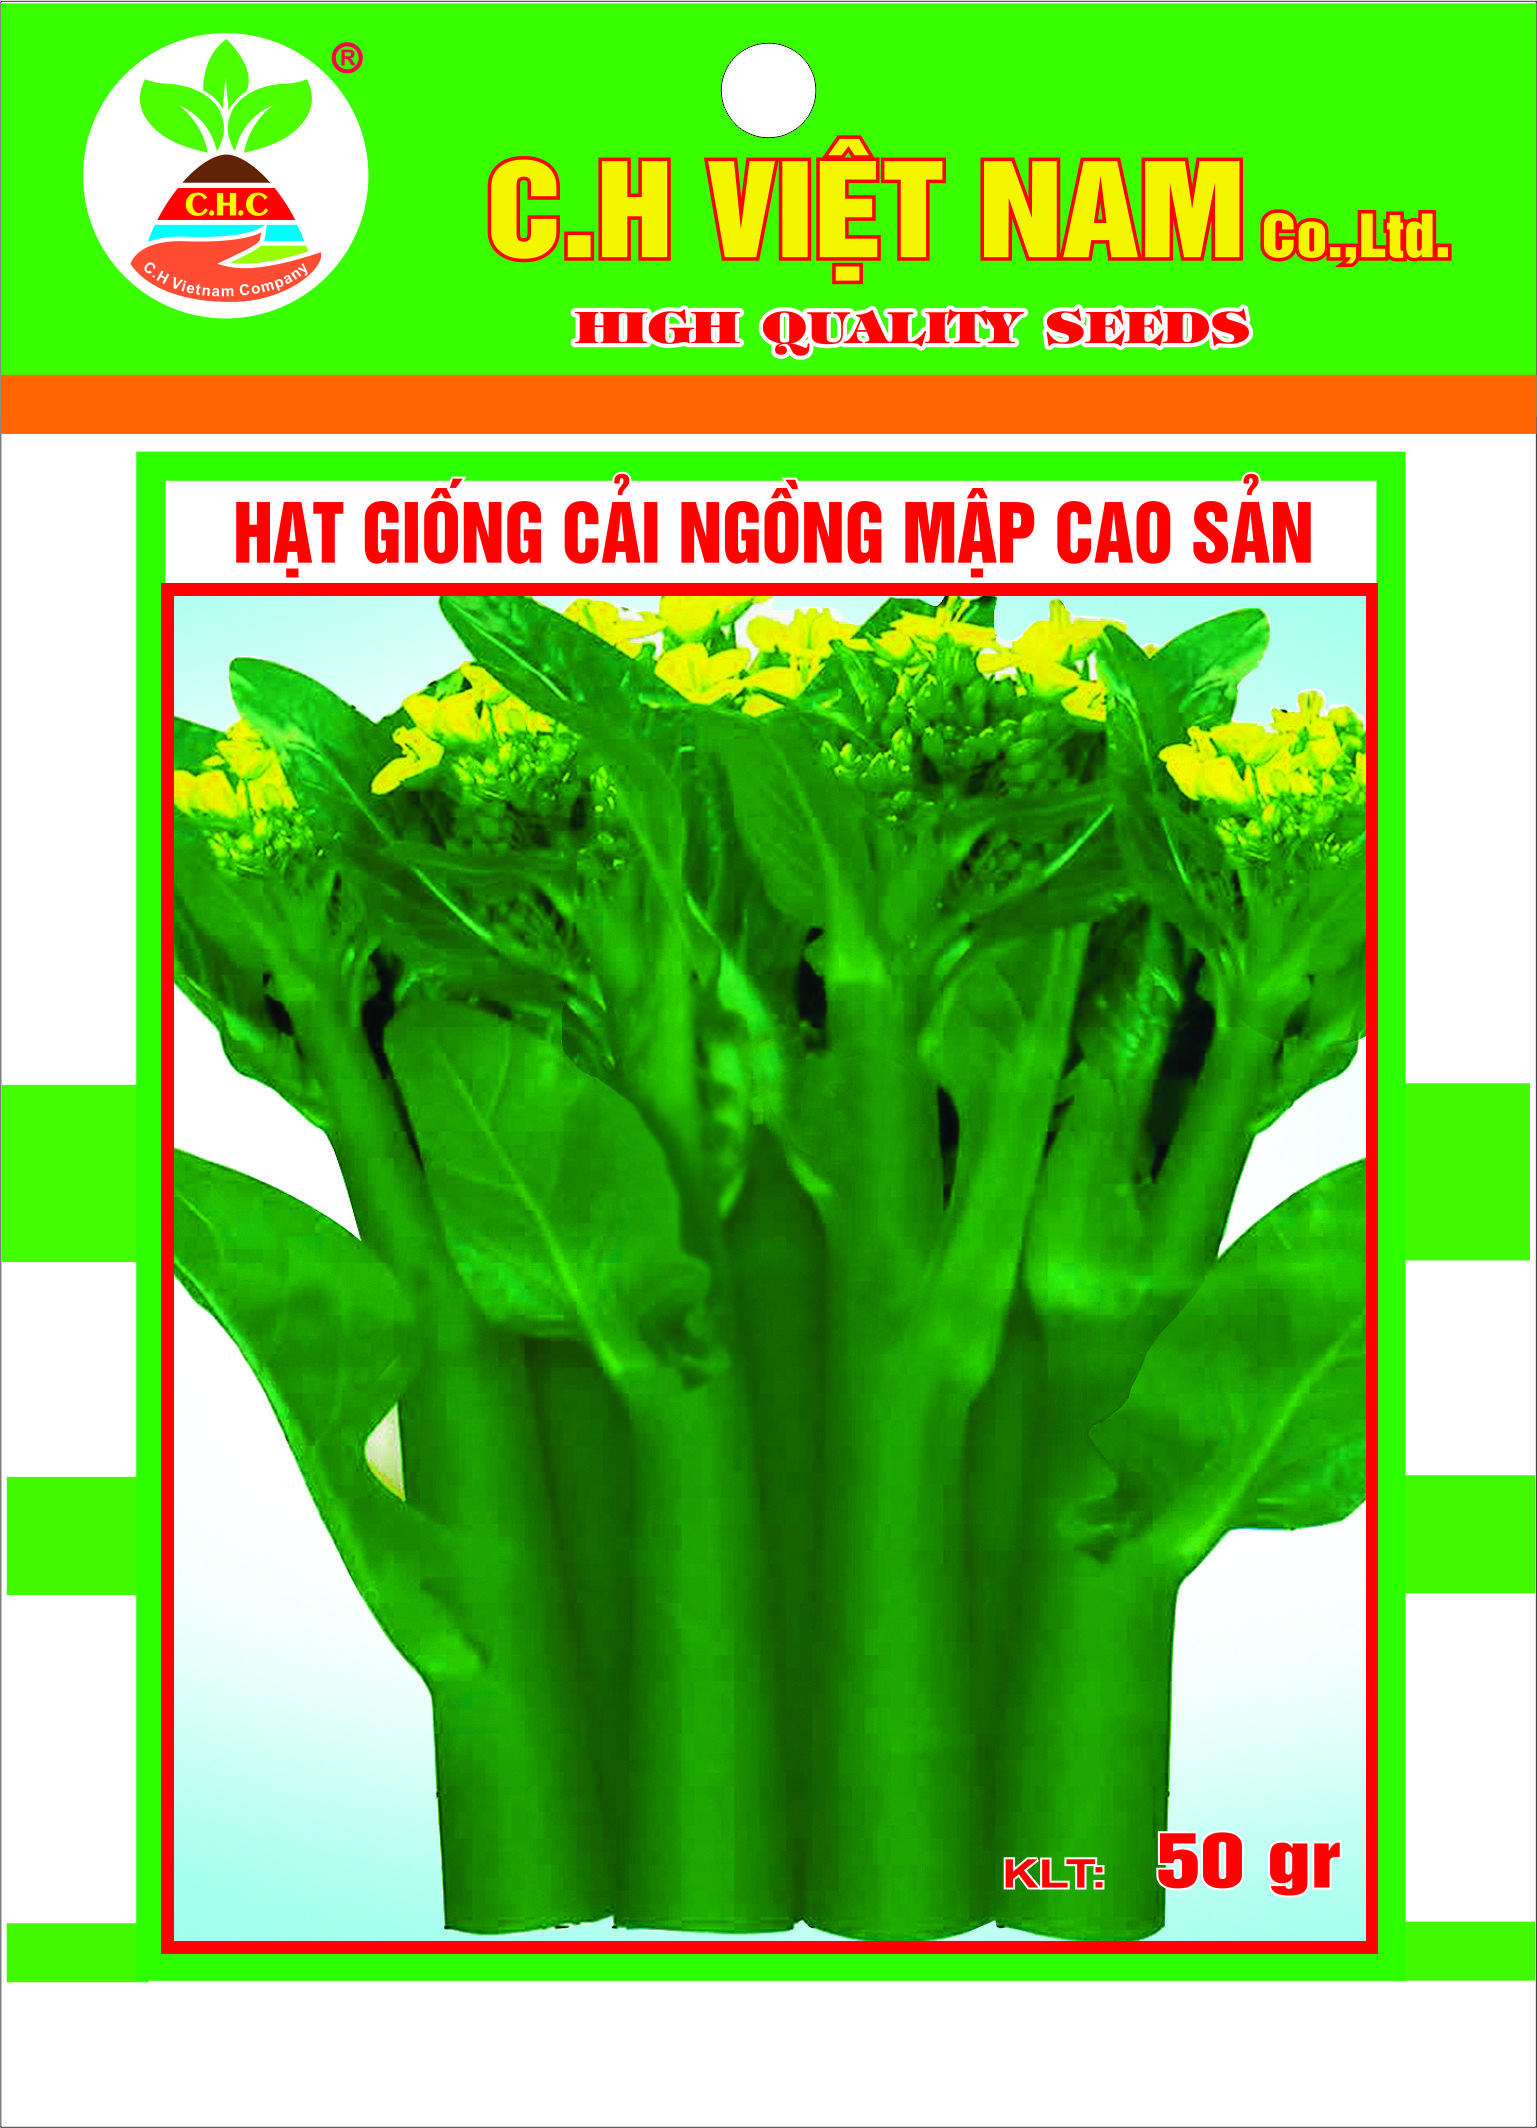 High yield fat kale seeds />
                                                 		<script>
                                                            var modal = document.getElementById(